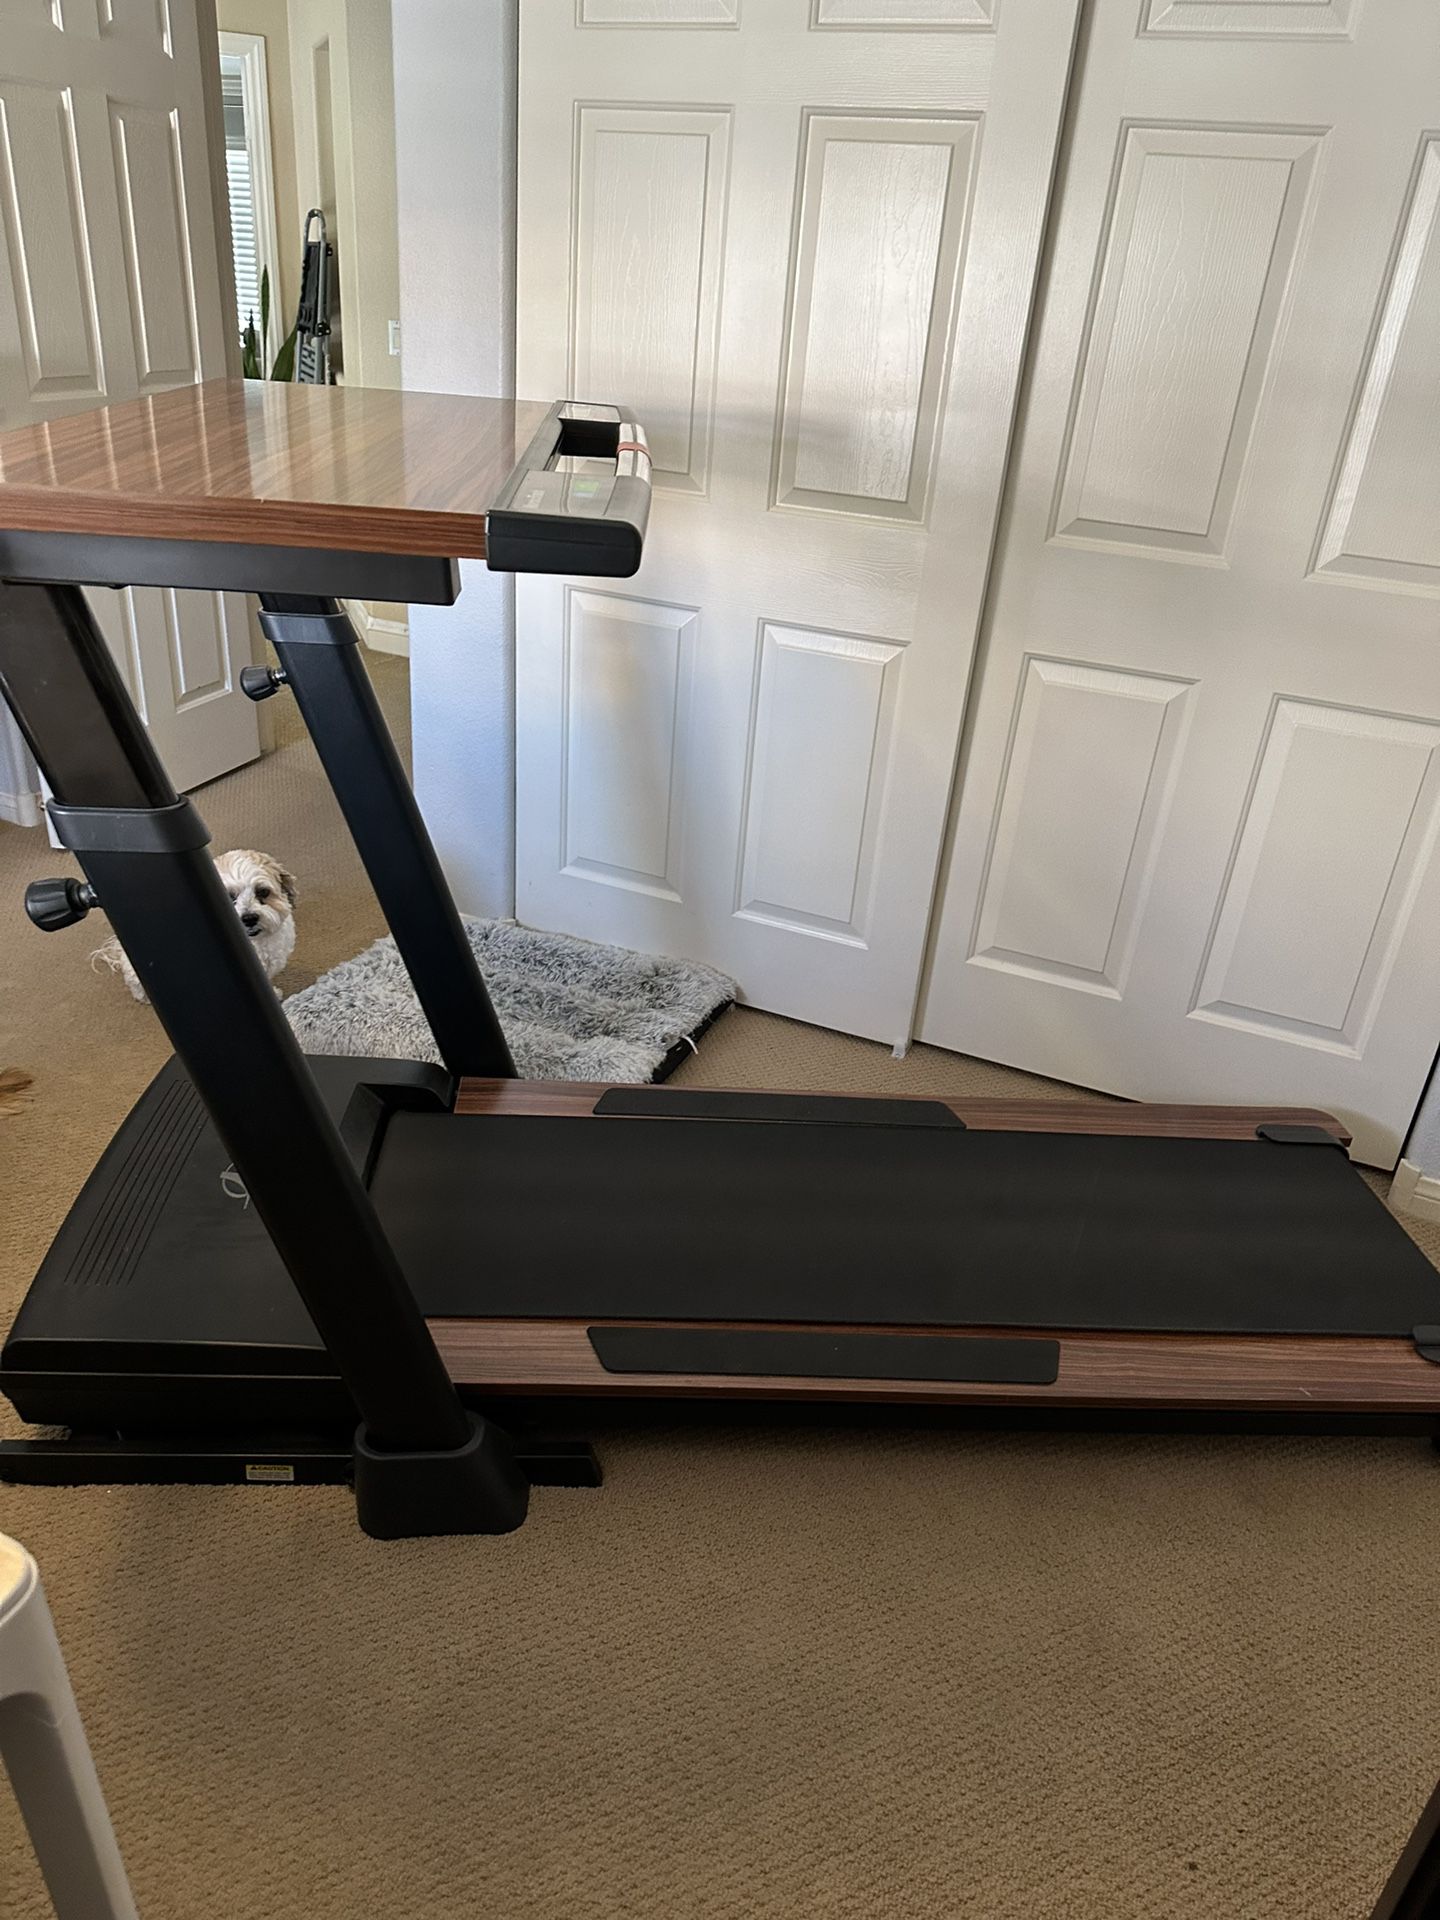 Nordictrack Treadmill Desk